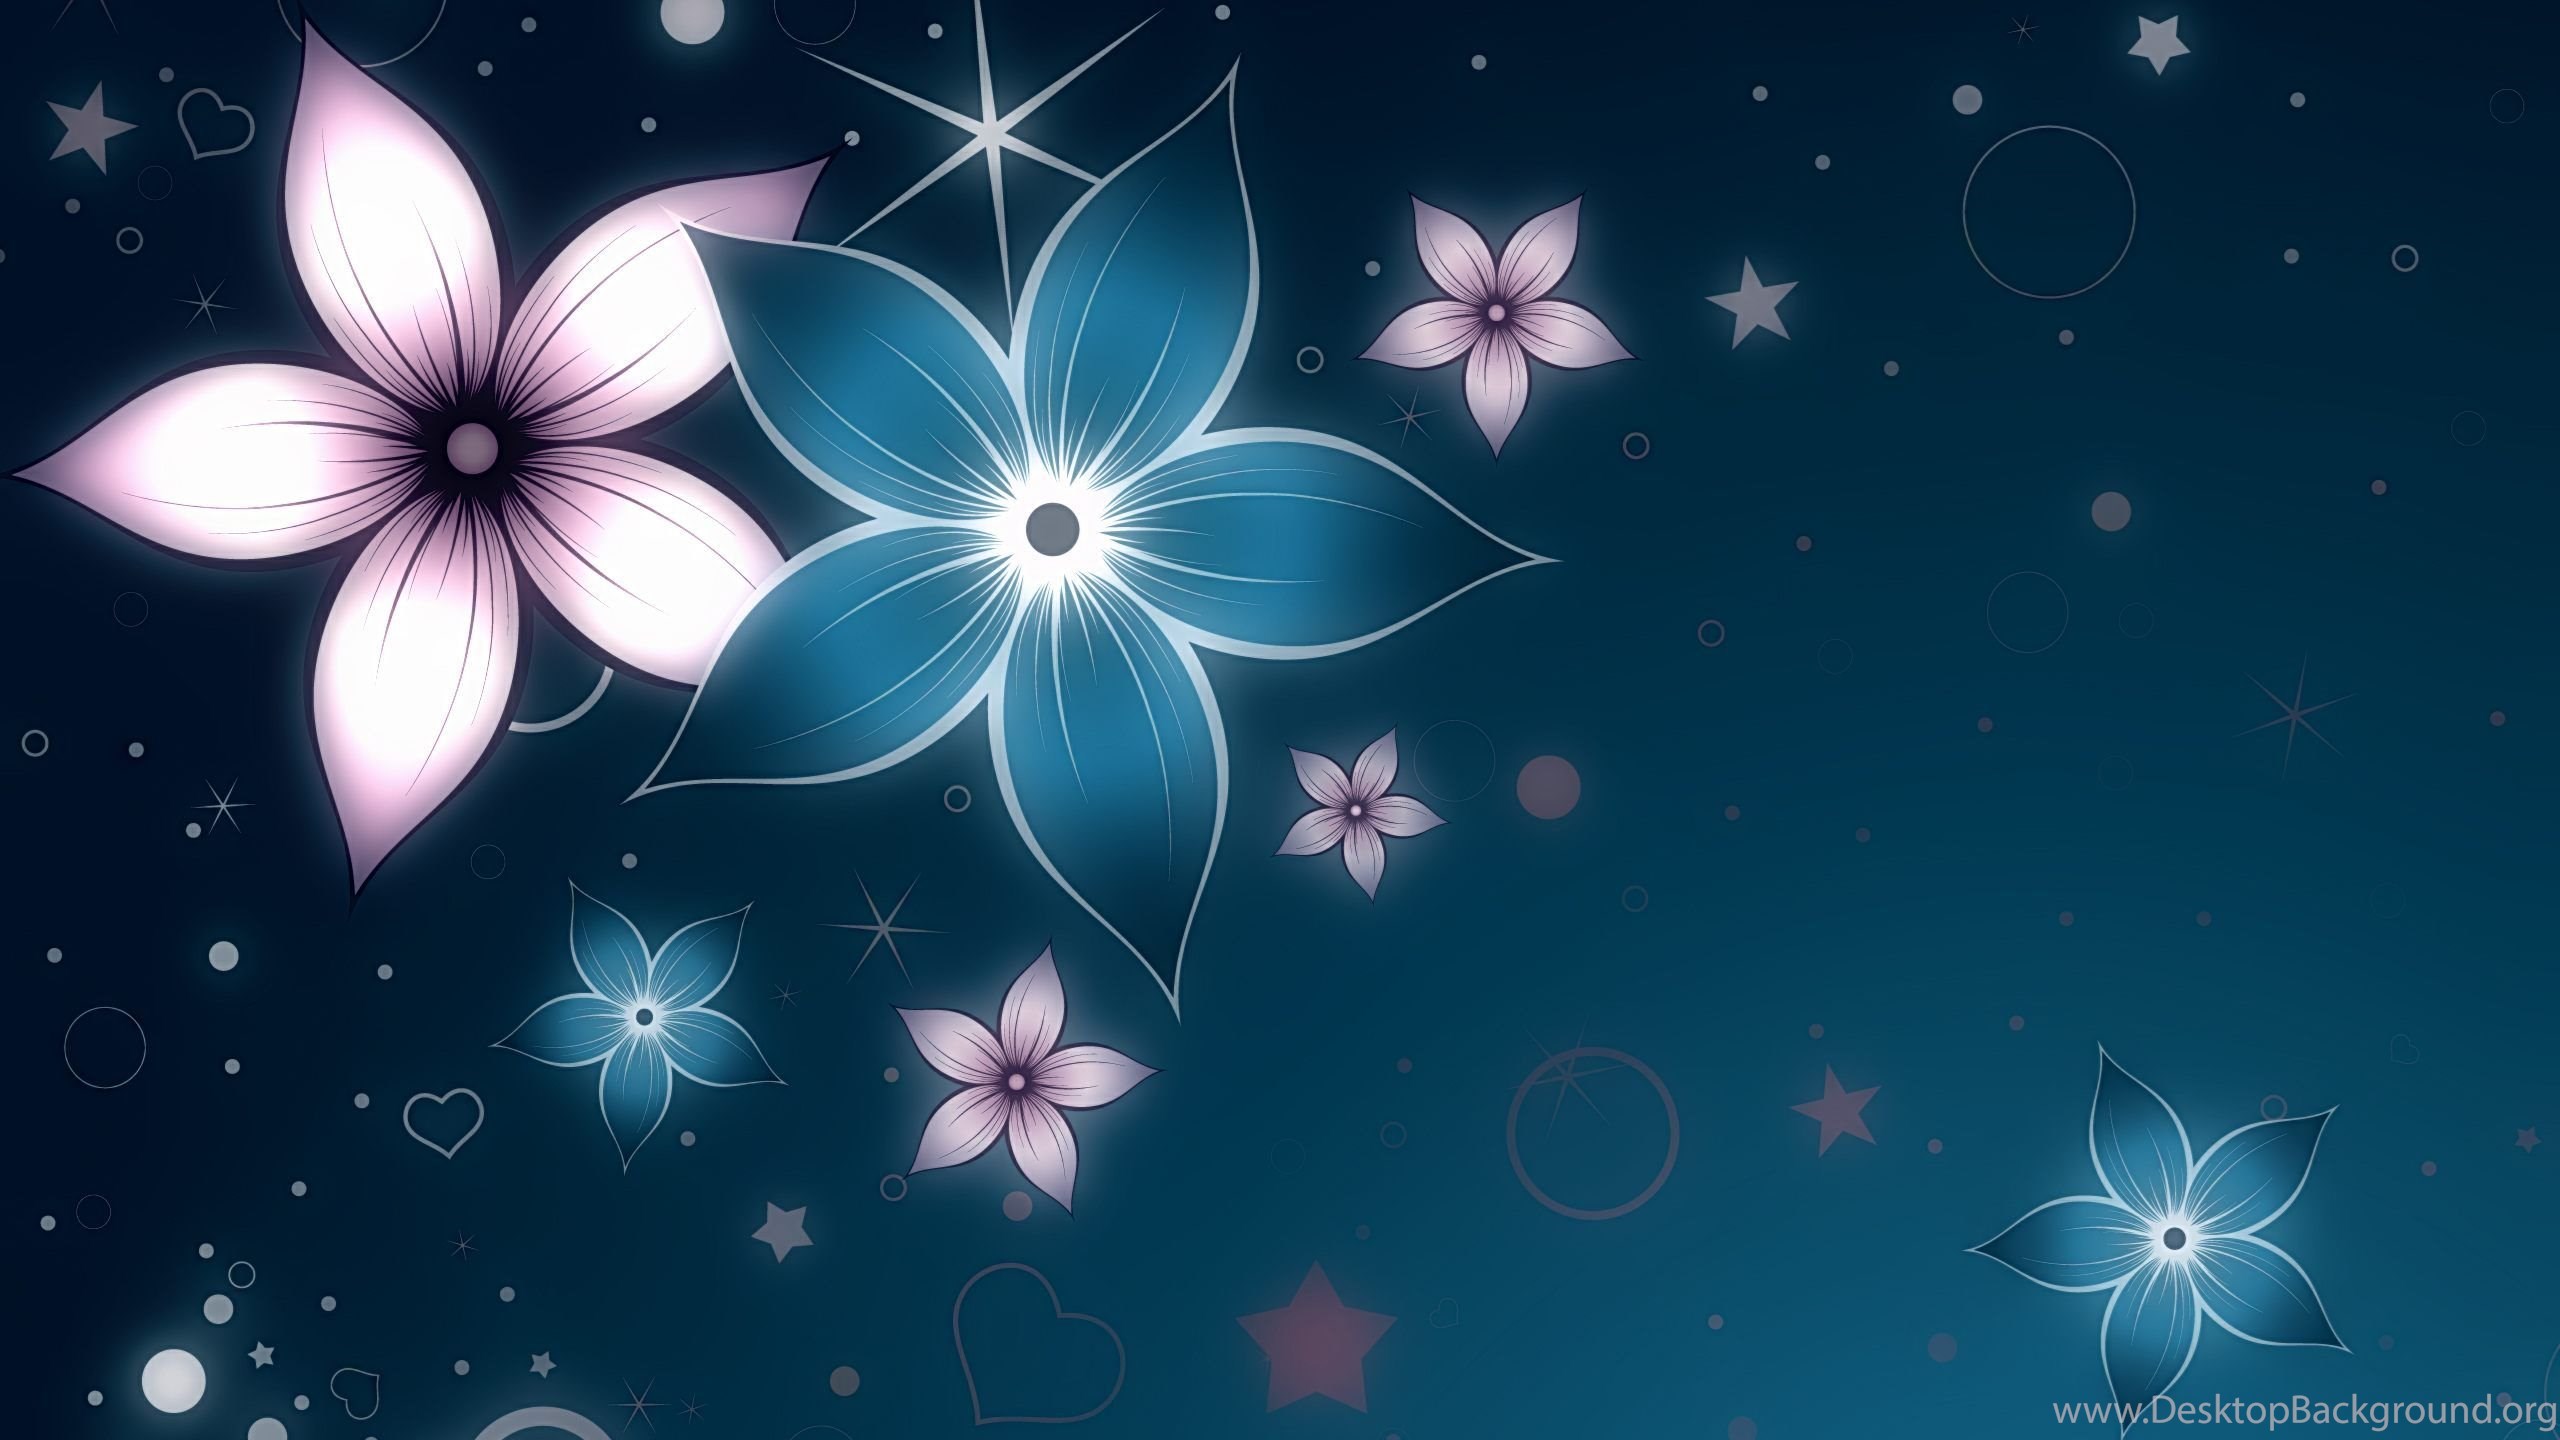 Flowers Vector Art Wallpaper HD Free Download For Desktop Desktop Background